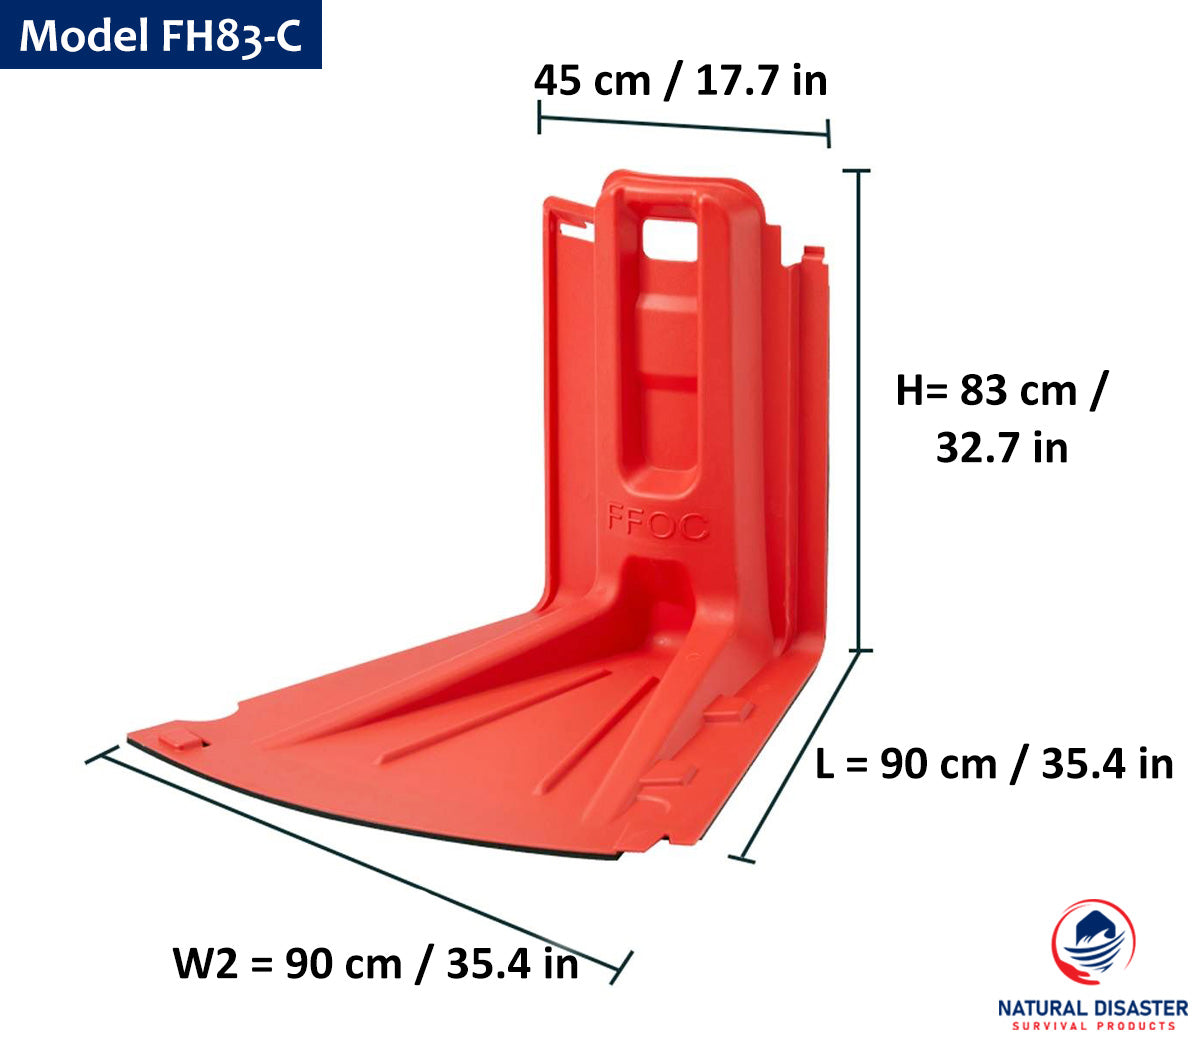 Flood Barriers Model FH83-C